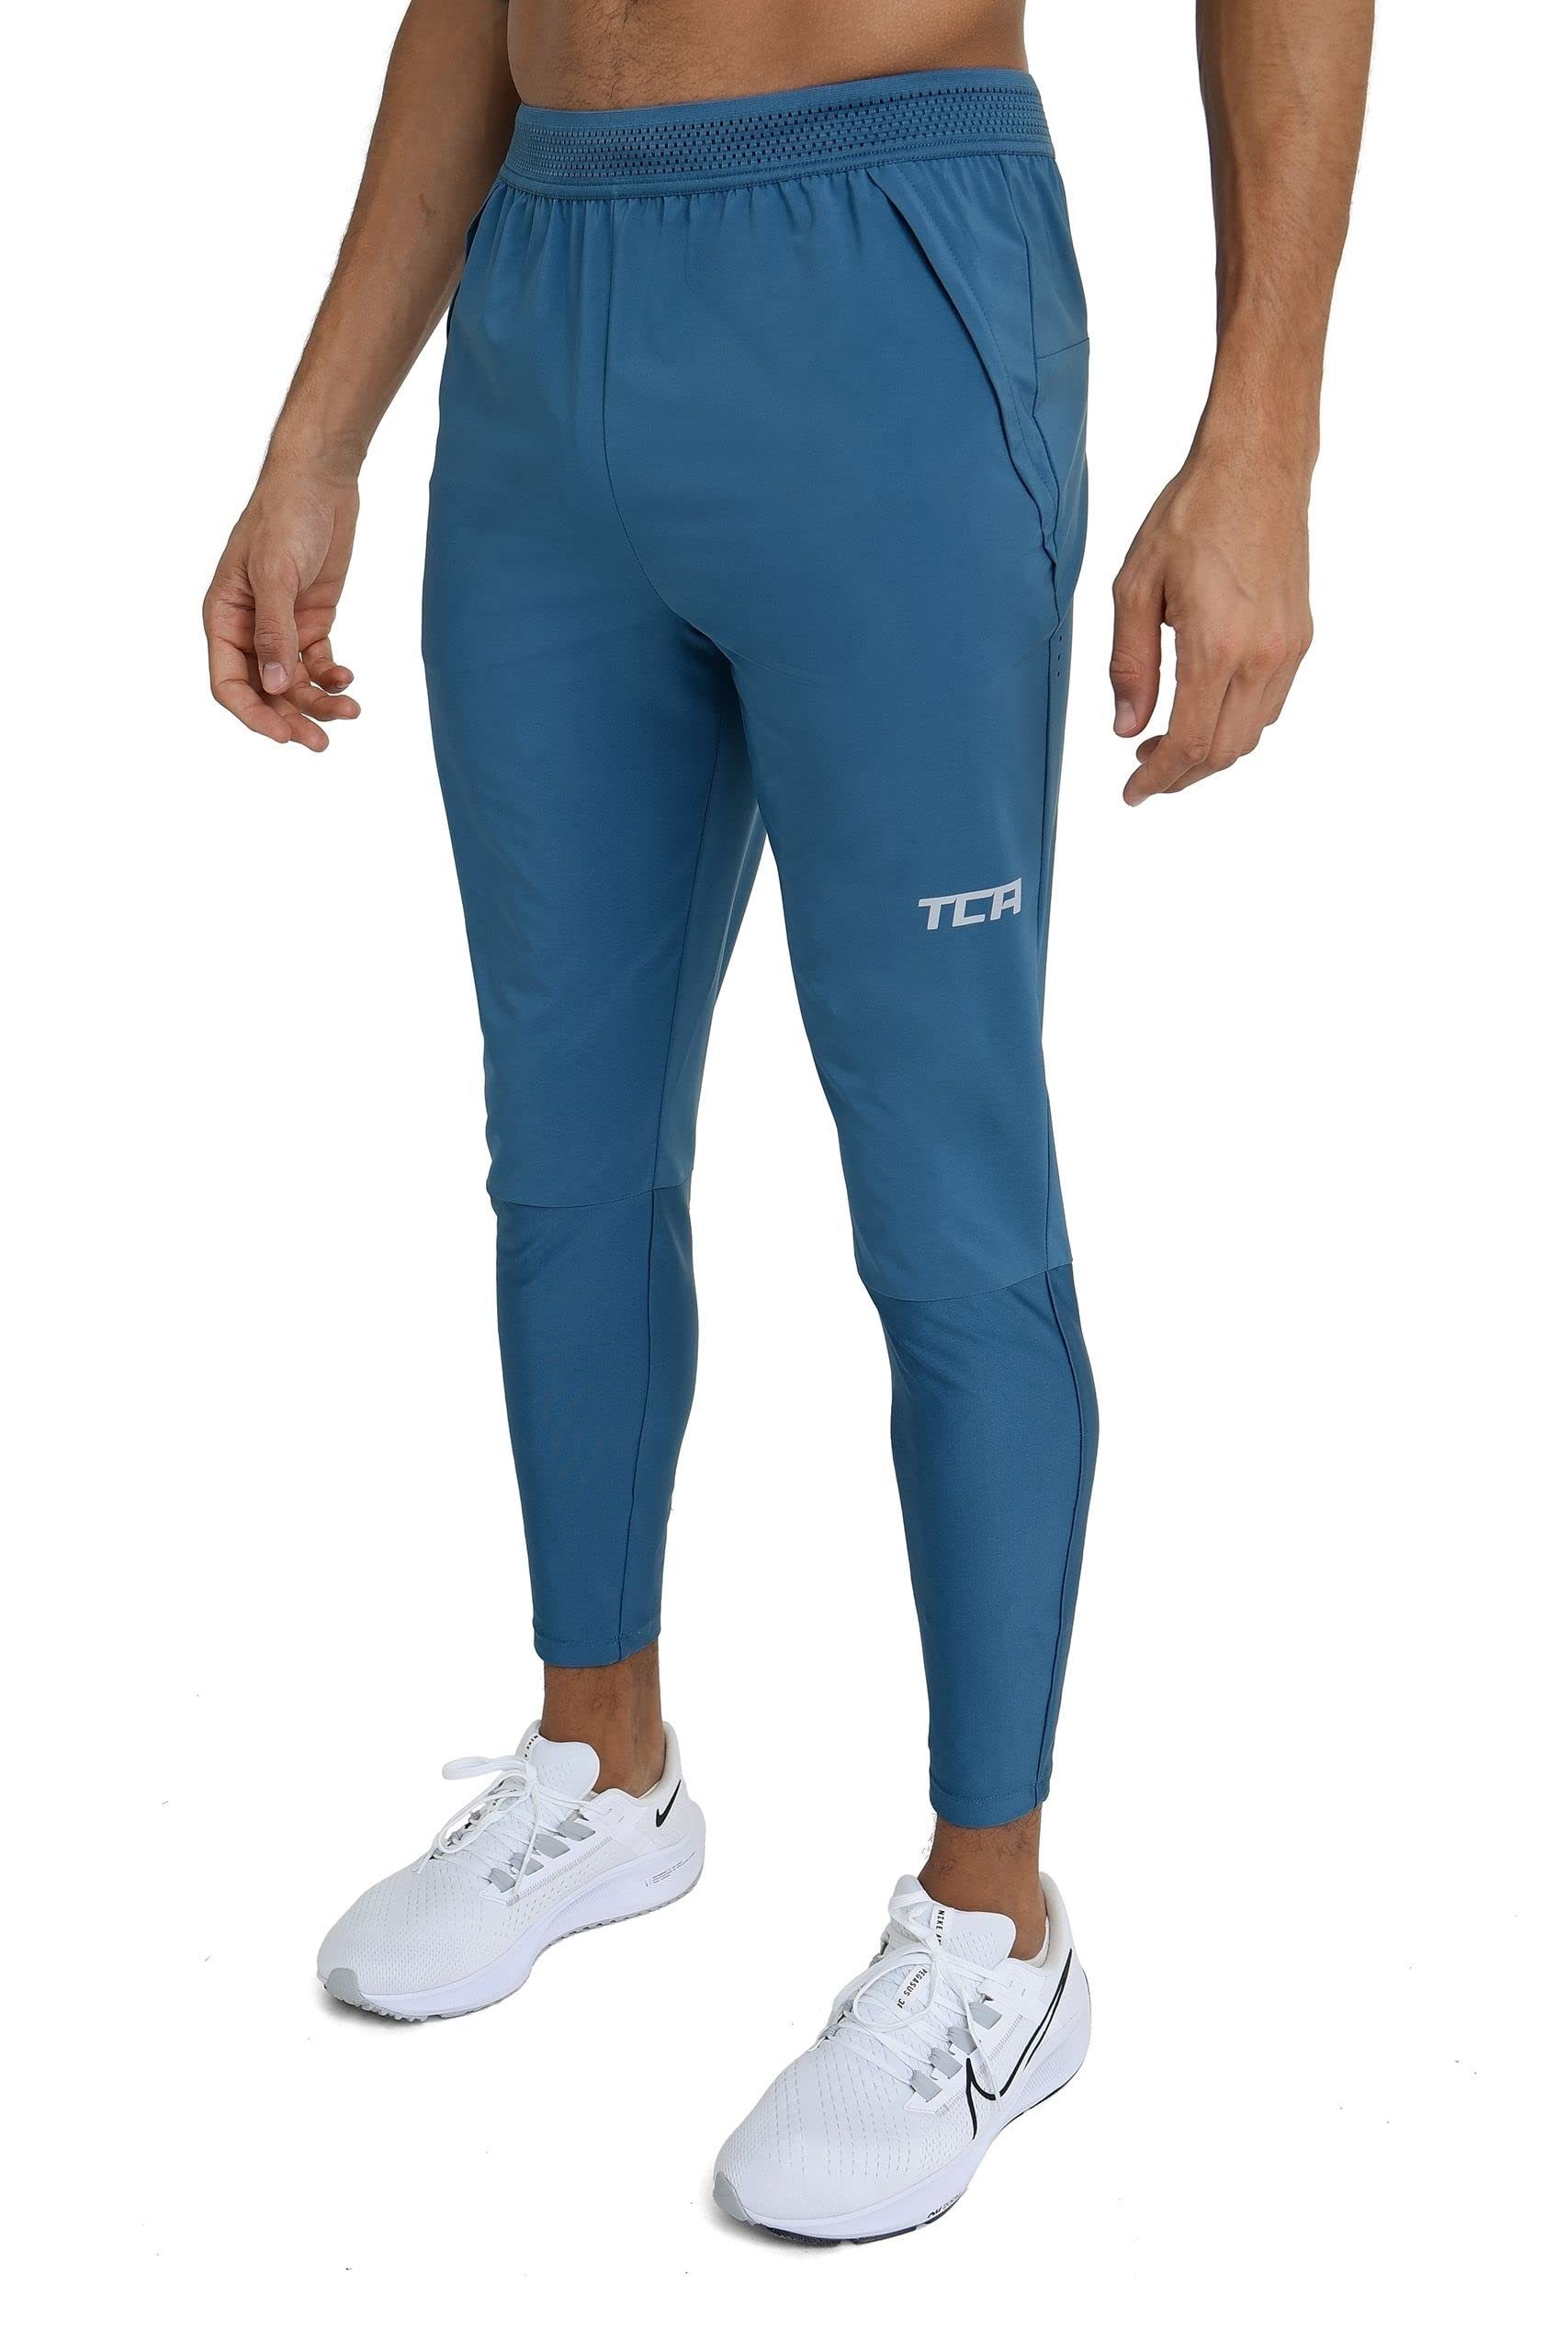 TCA Laufhose TCA Herren Jogginghose mit Reißverschlusstaschen - Blau, XL